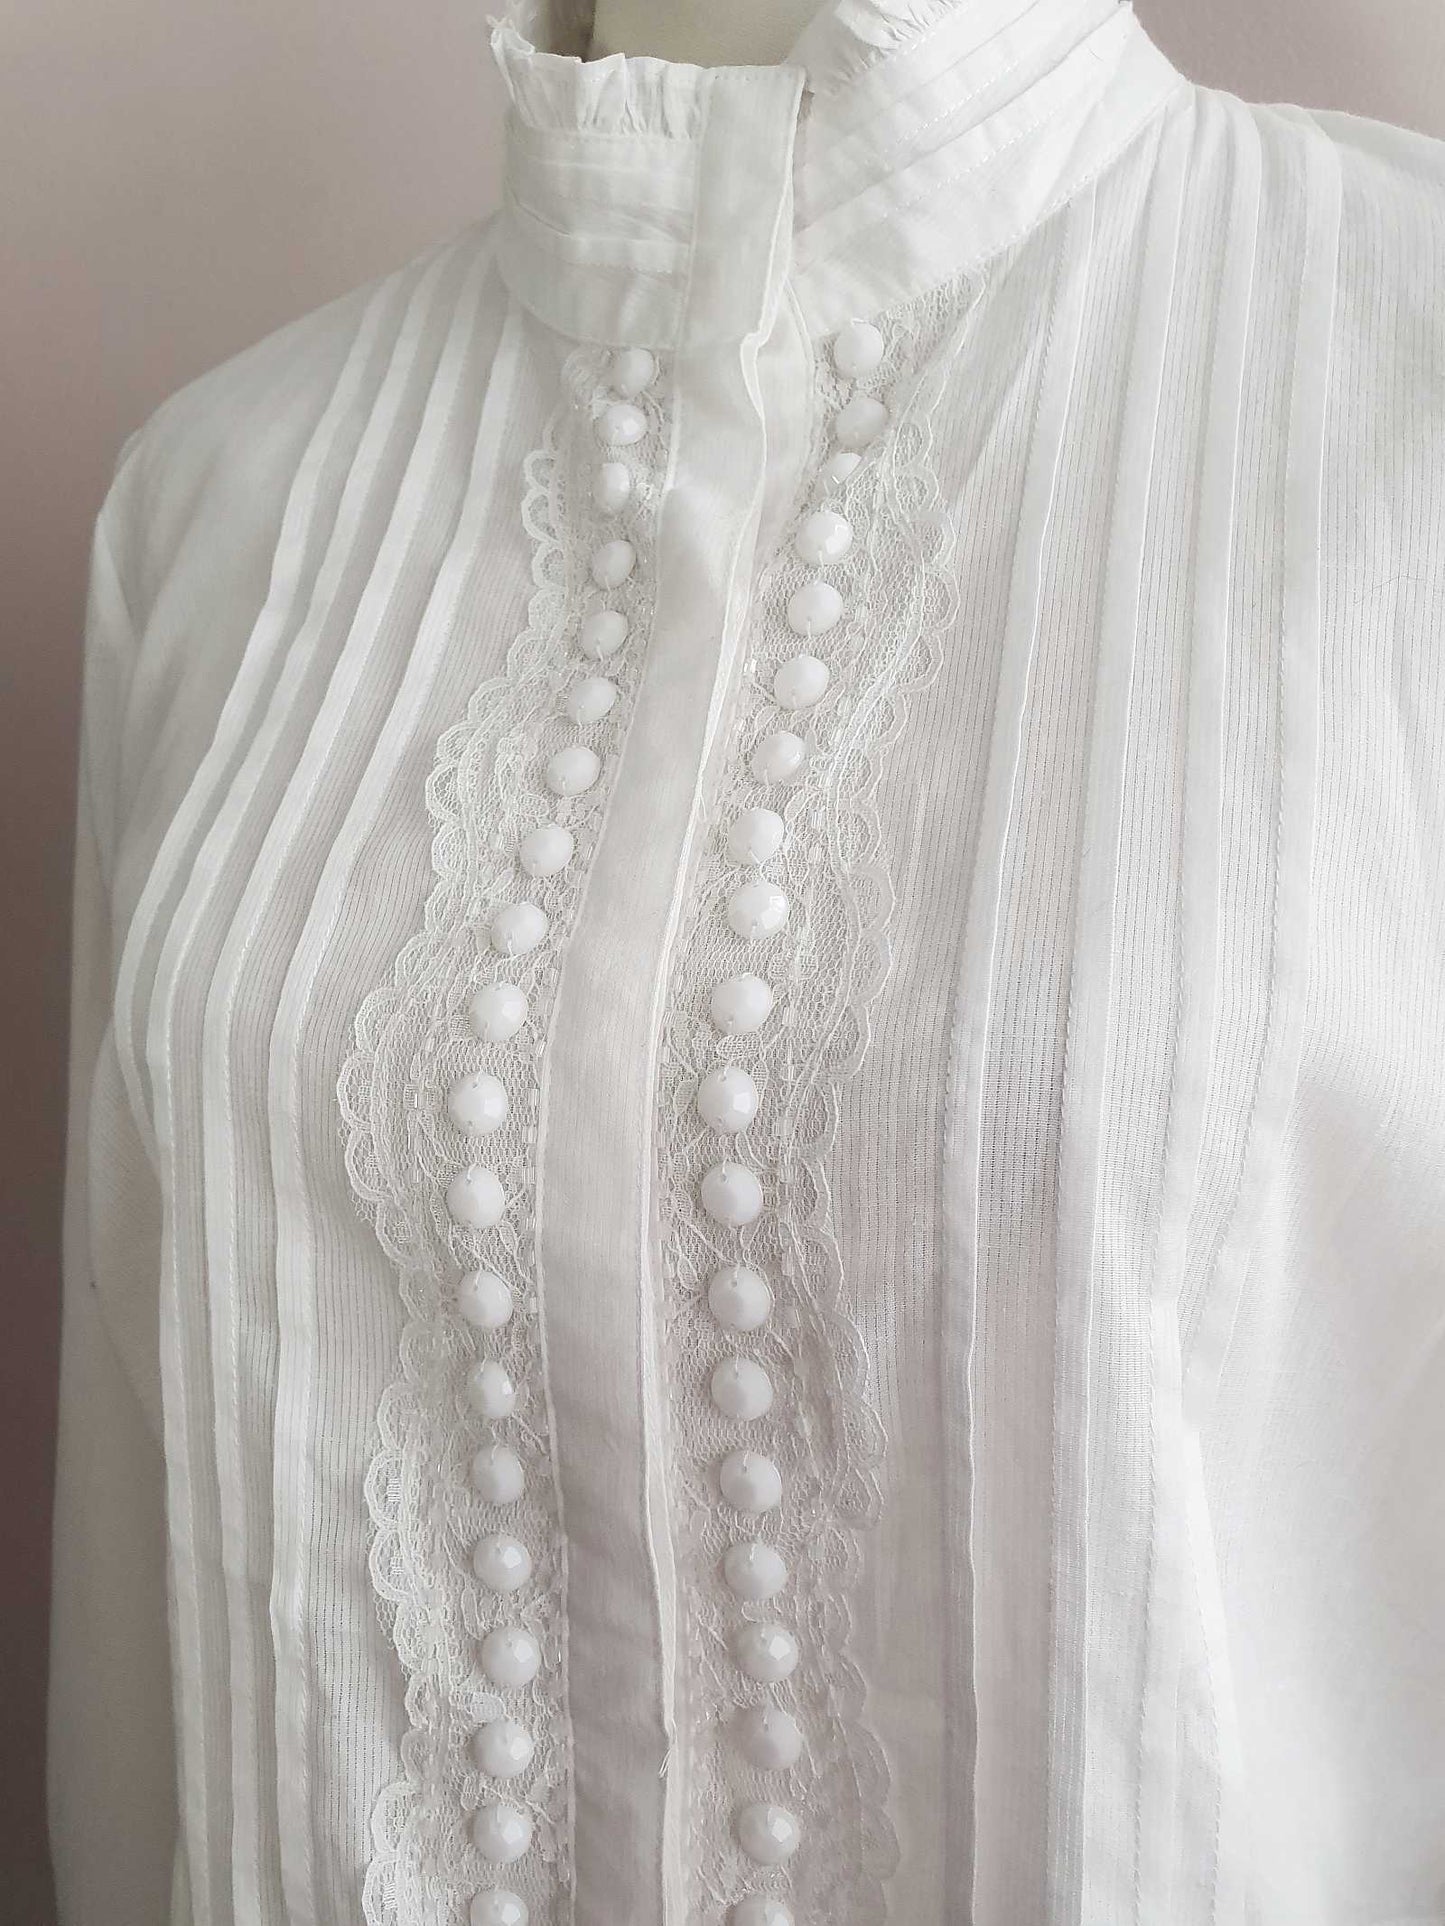 1990s Oversized White Cotton & Lace Victorian Vintage Blouse Shirt - Size 18